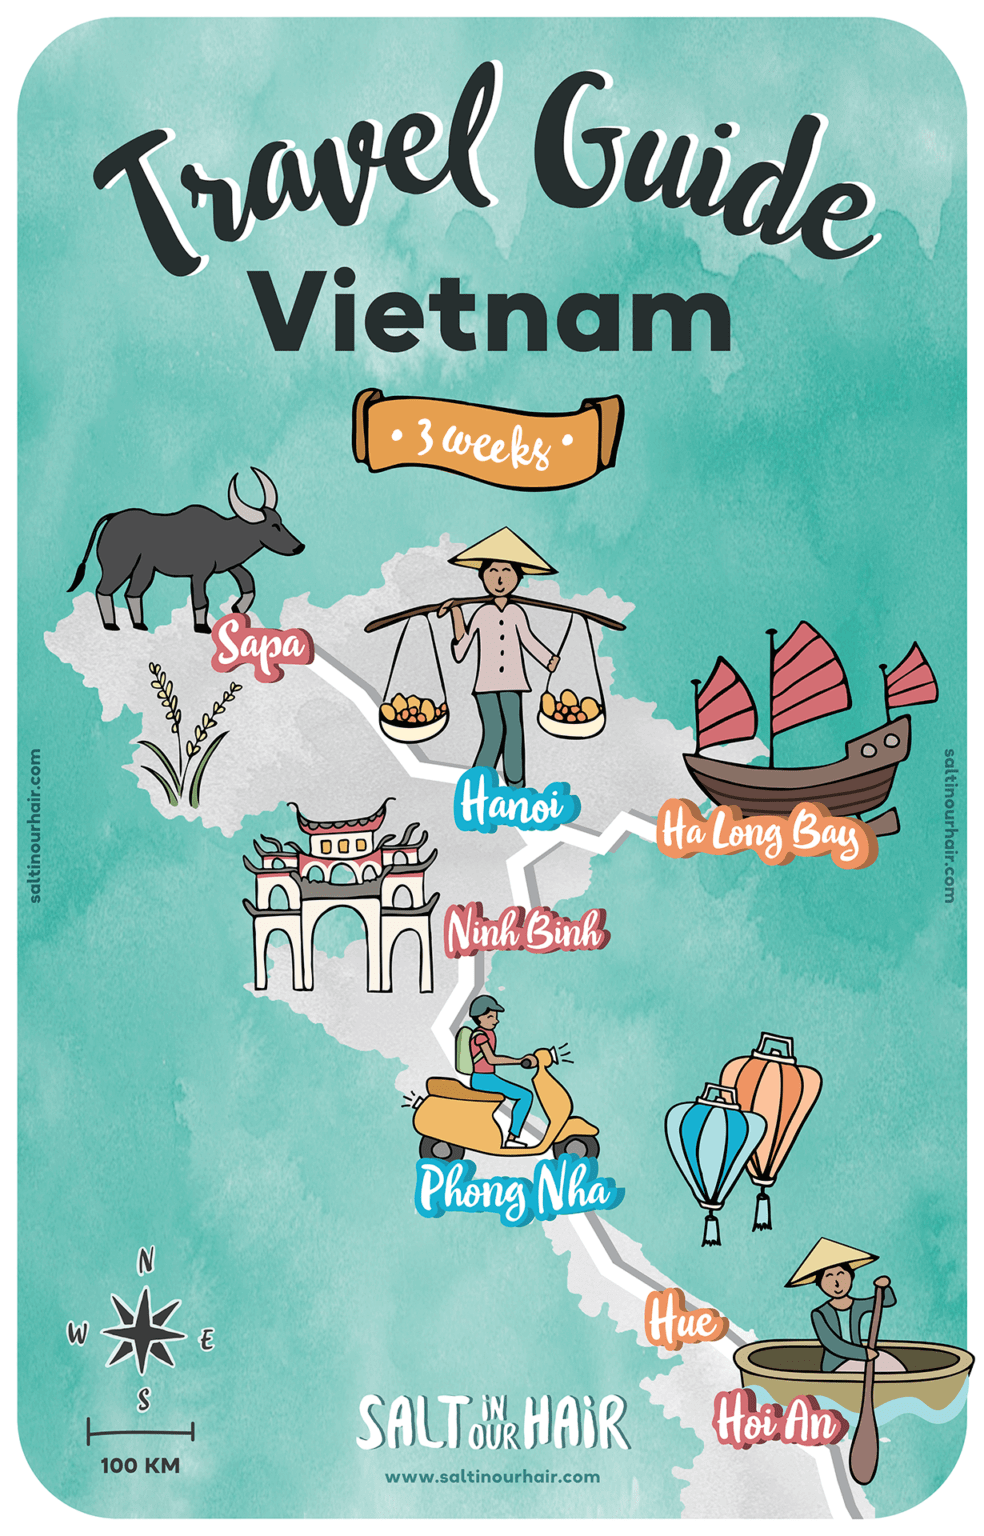 Vietnam Travel Guide Map 984x1536 